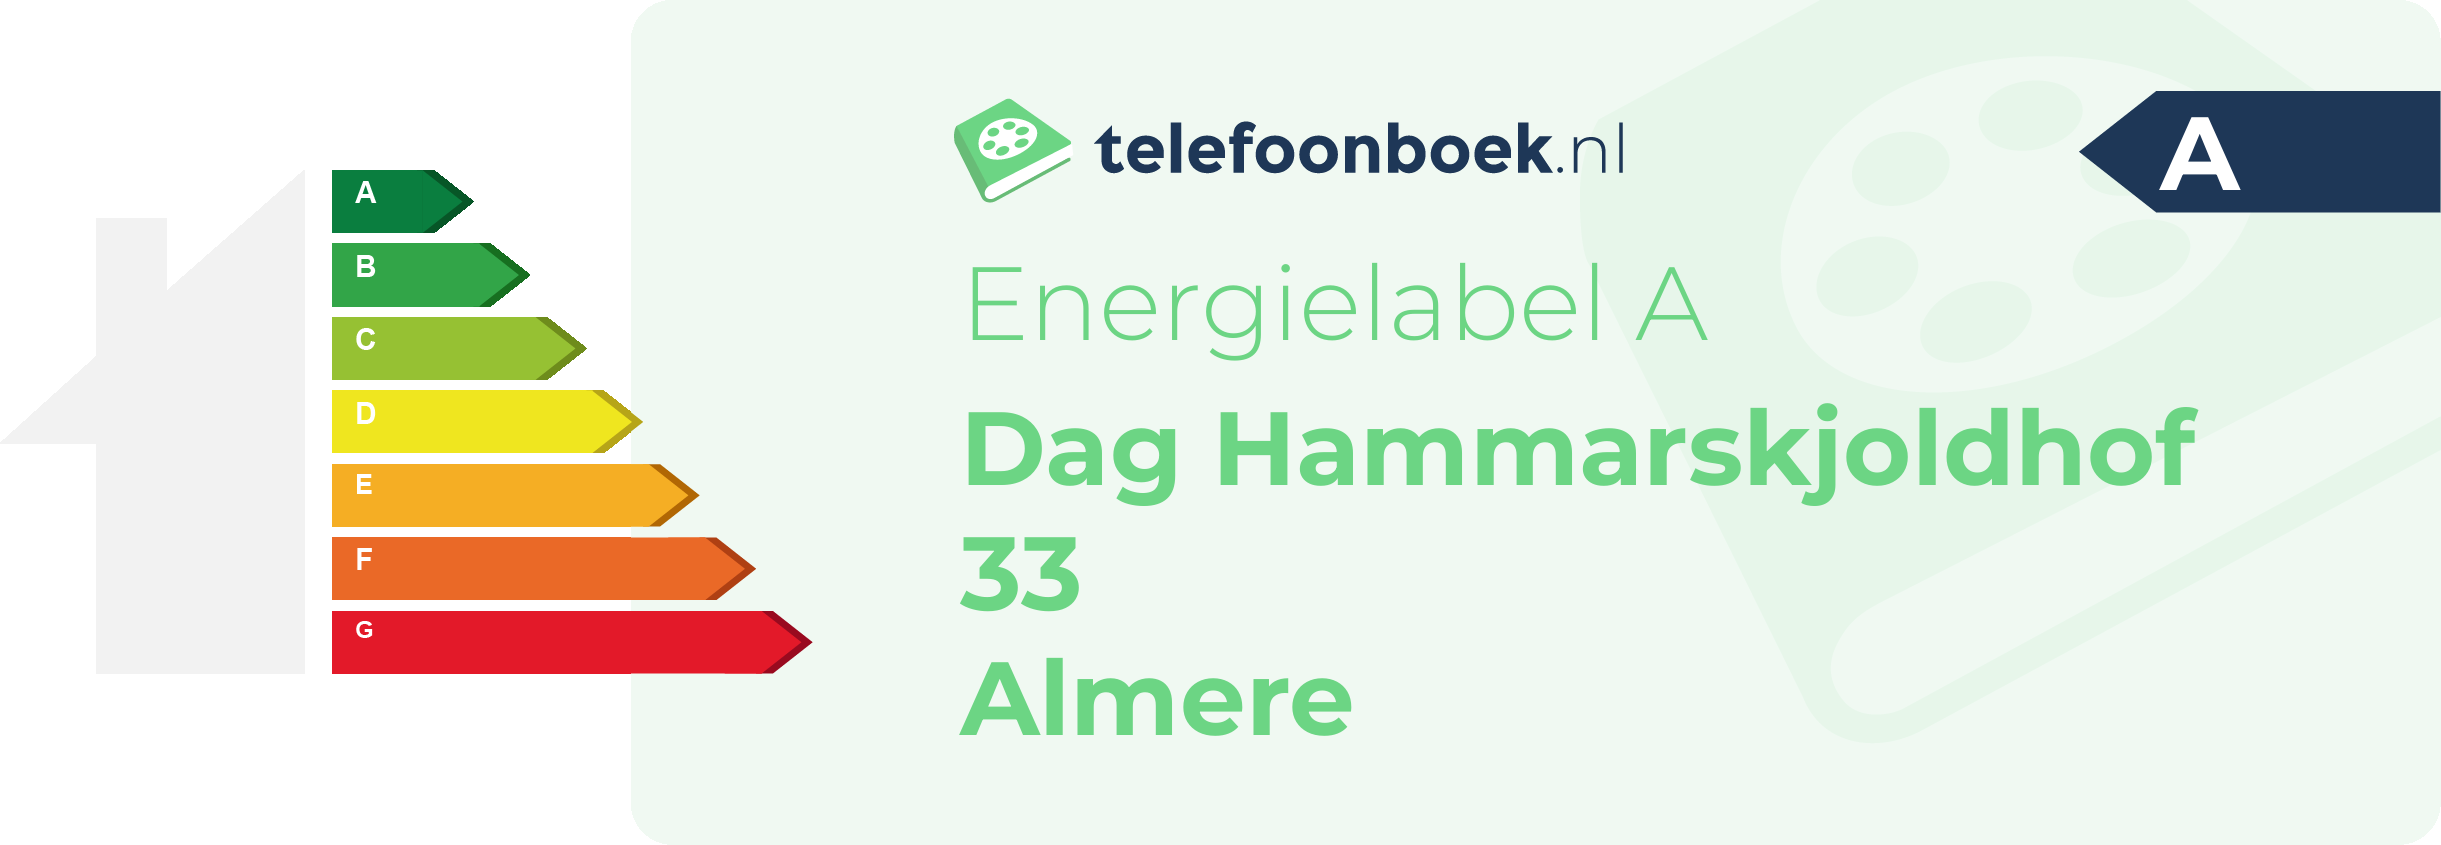 Energielabel Dag Hammarskjoldhof 33 Almere